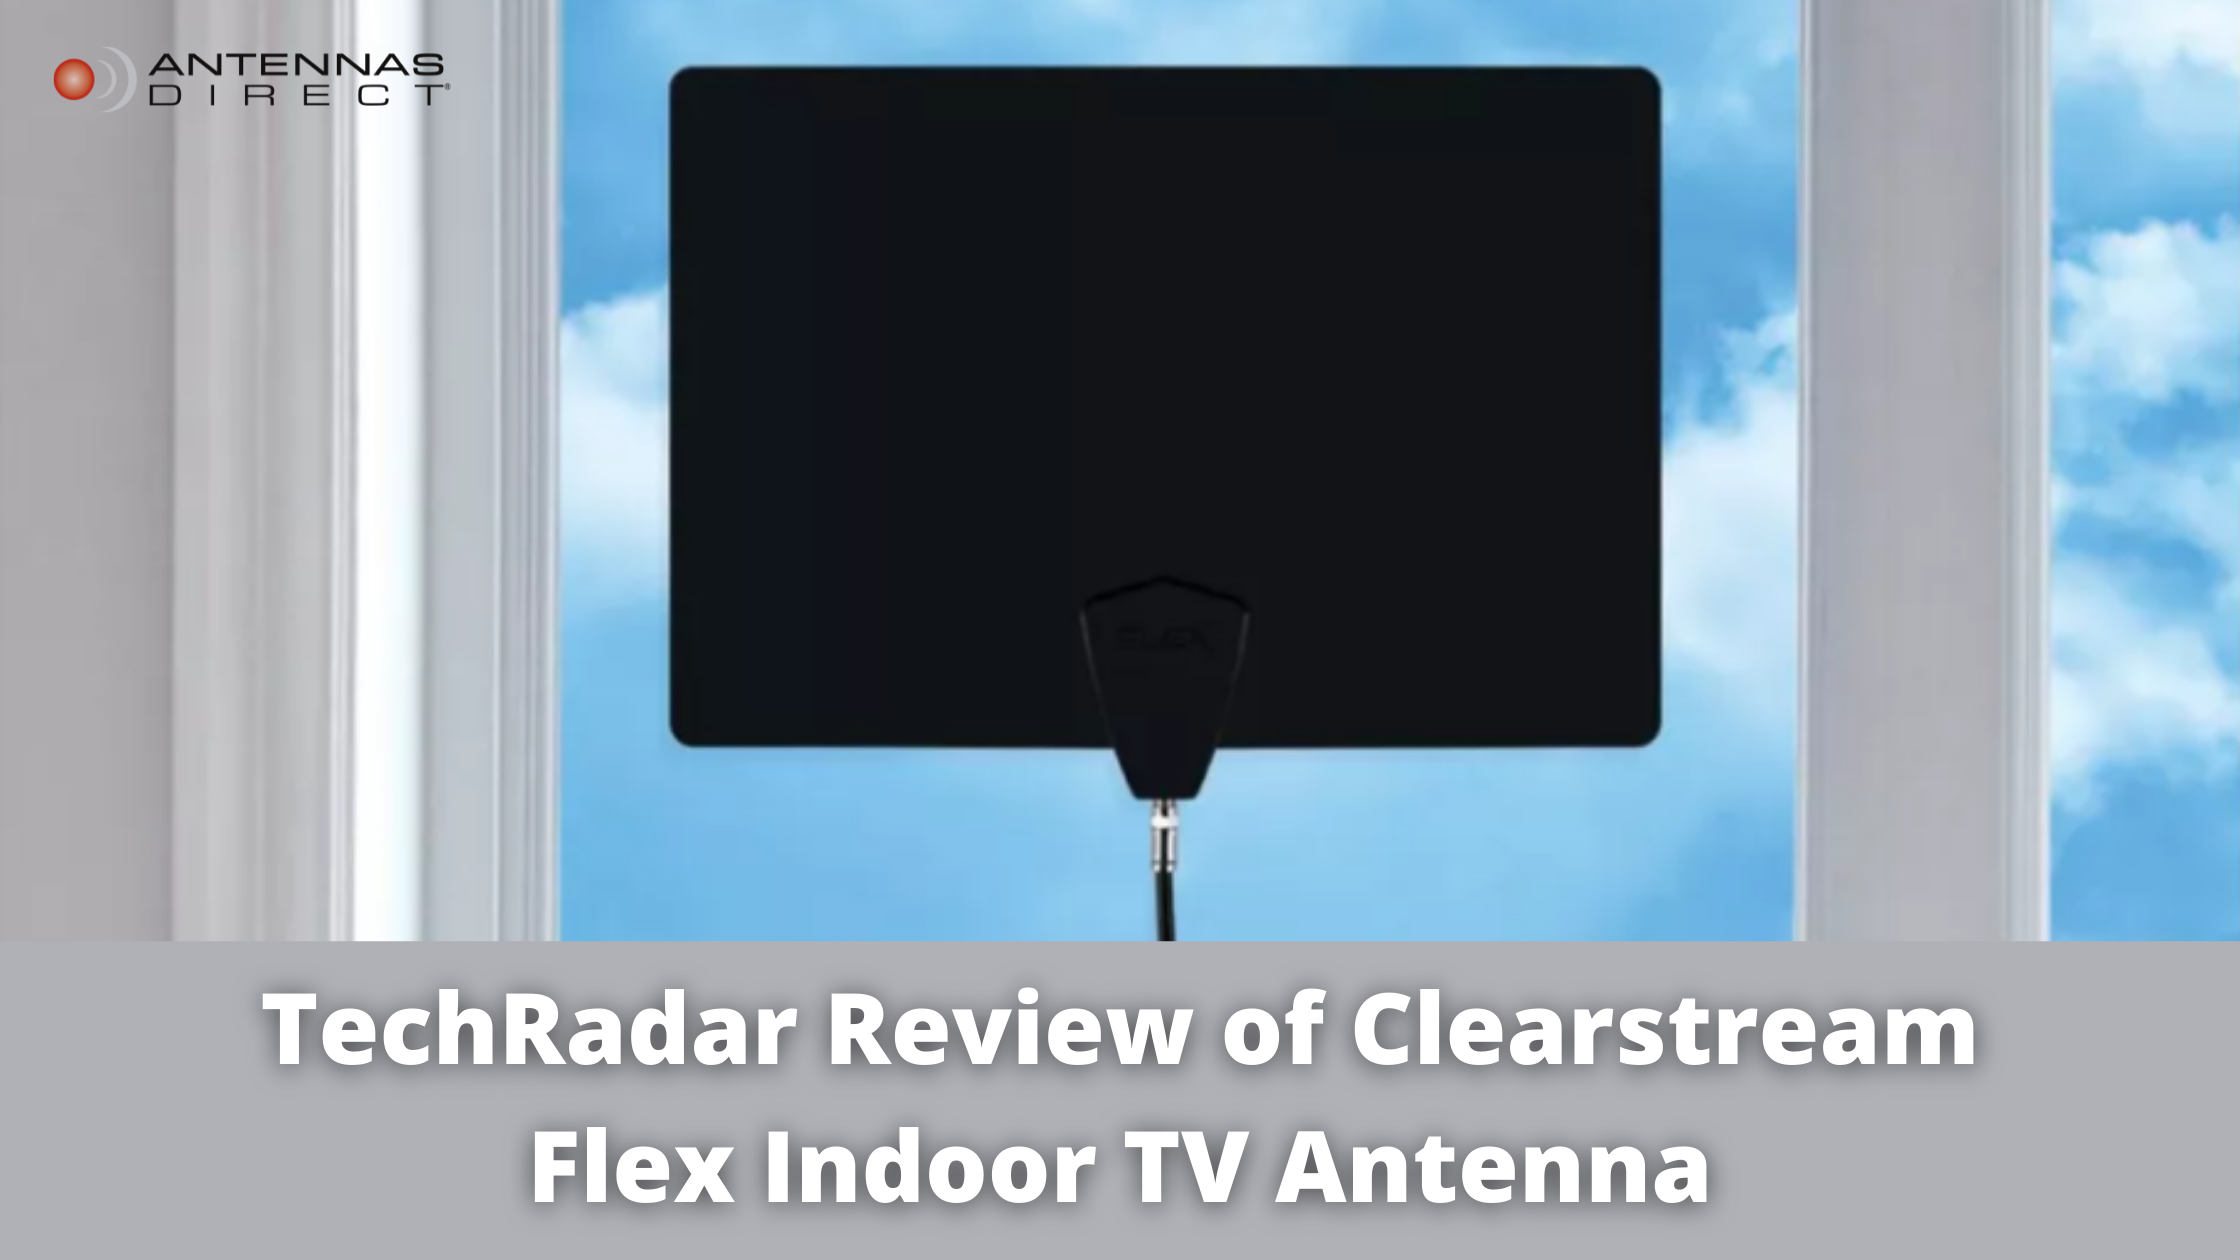 TechRadar Review of the Clearstream Flex Indoor TV Antenna